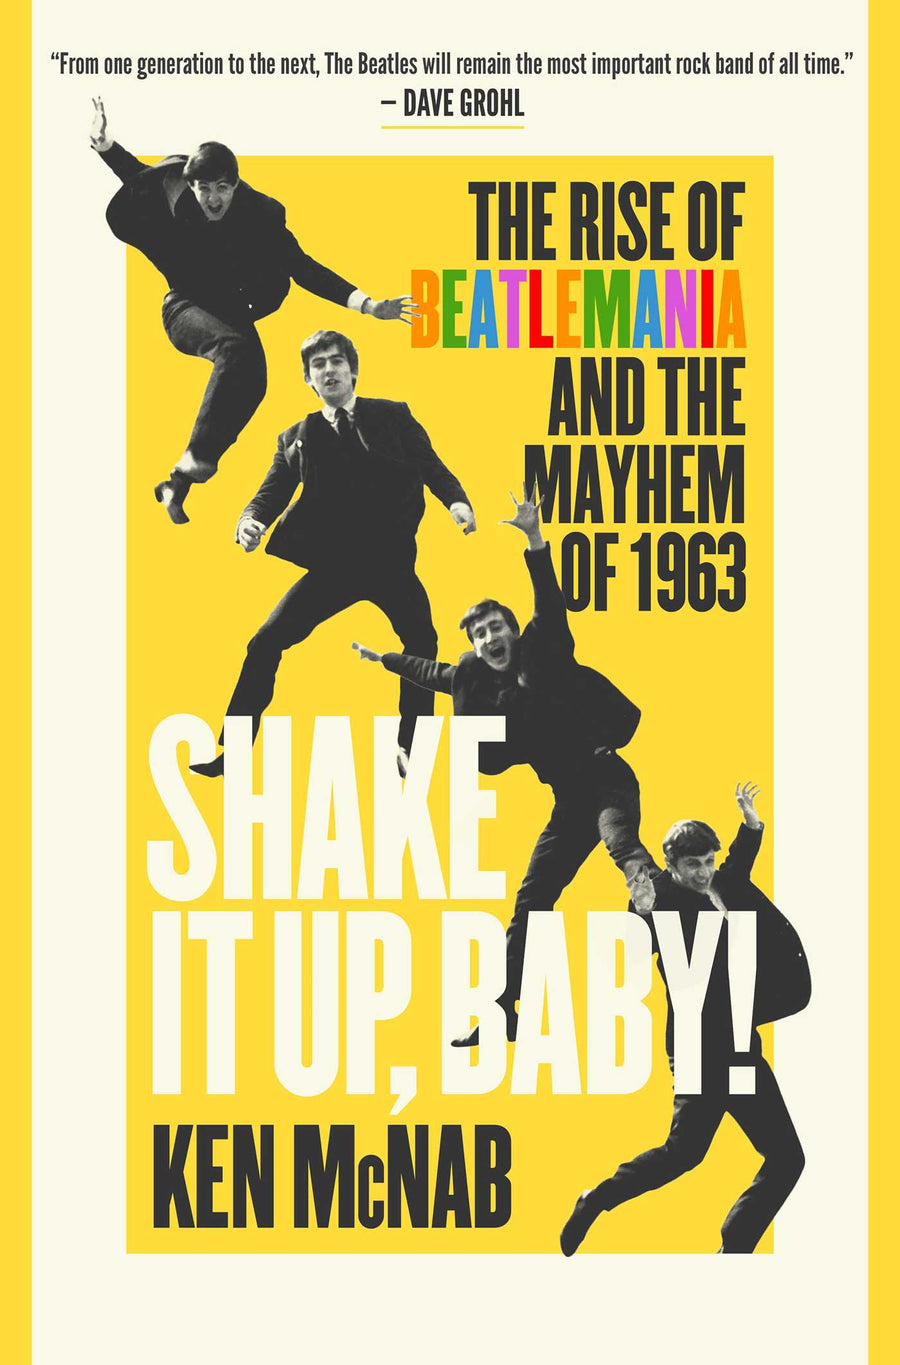 Shake It Up, Baby!